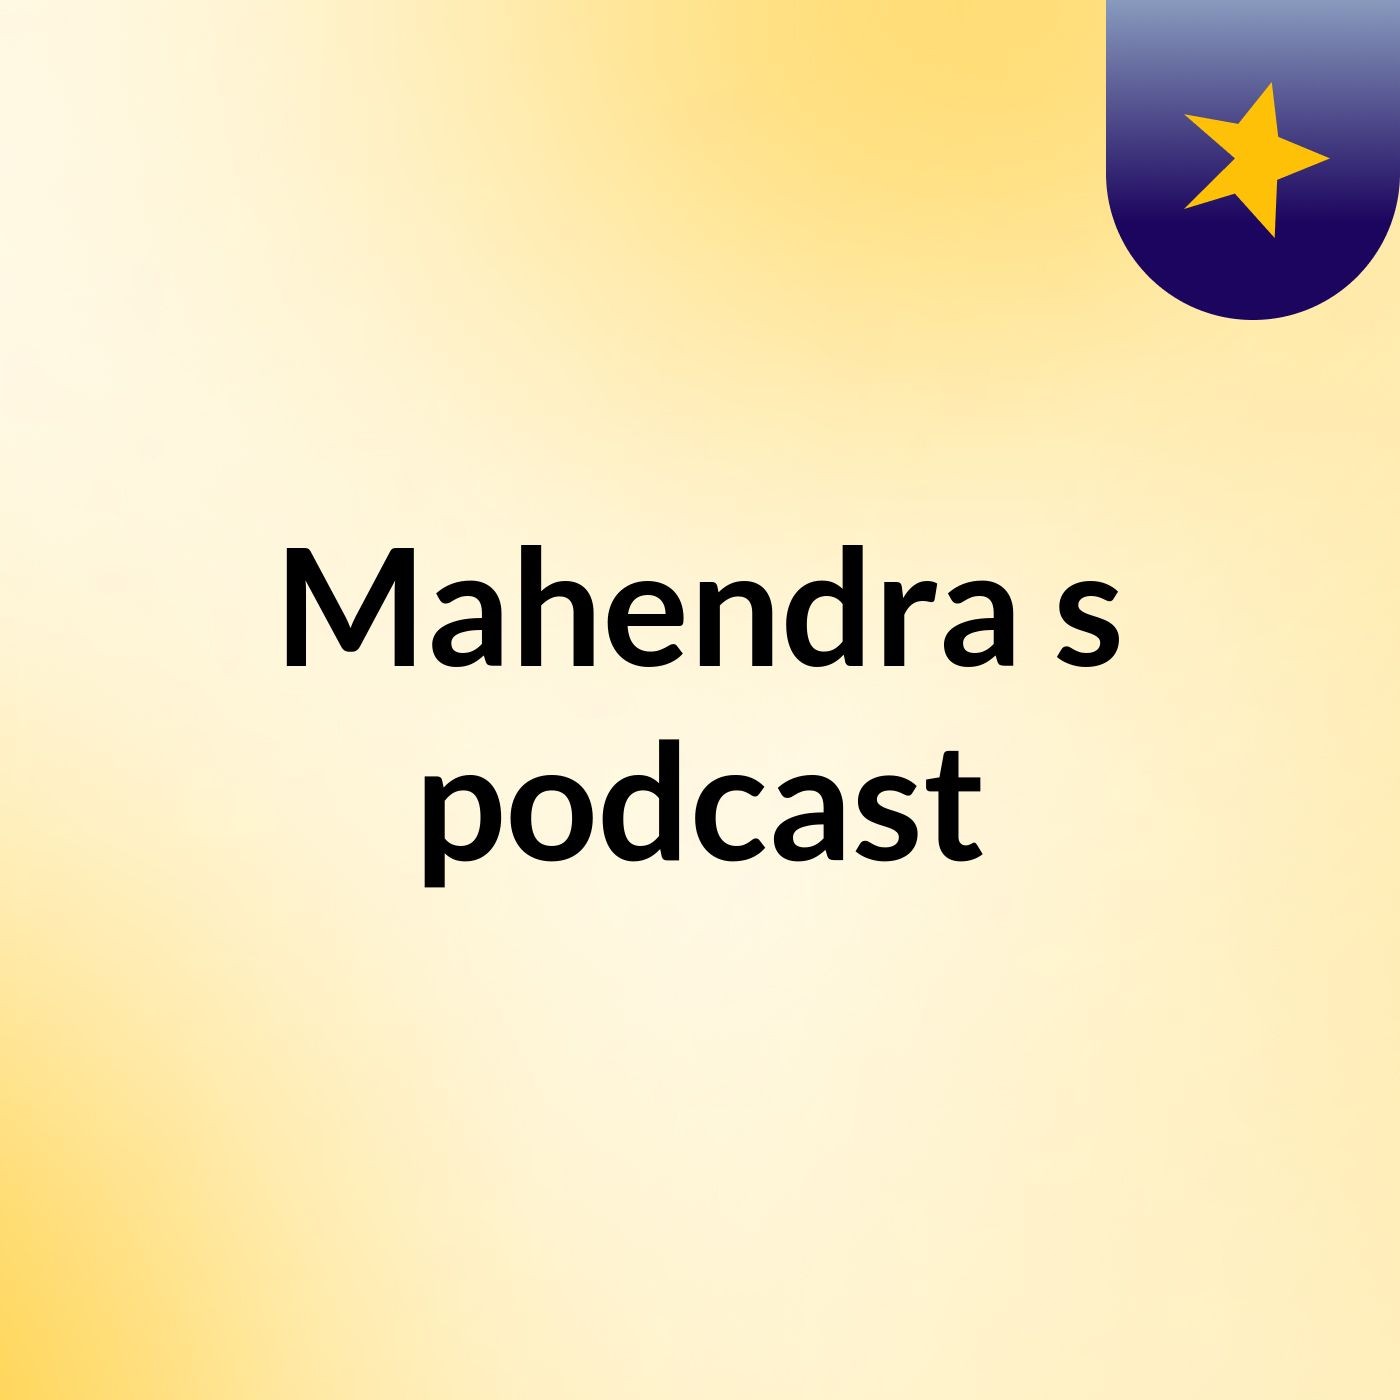 Episode 5 - Mahendra's podcast